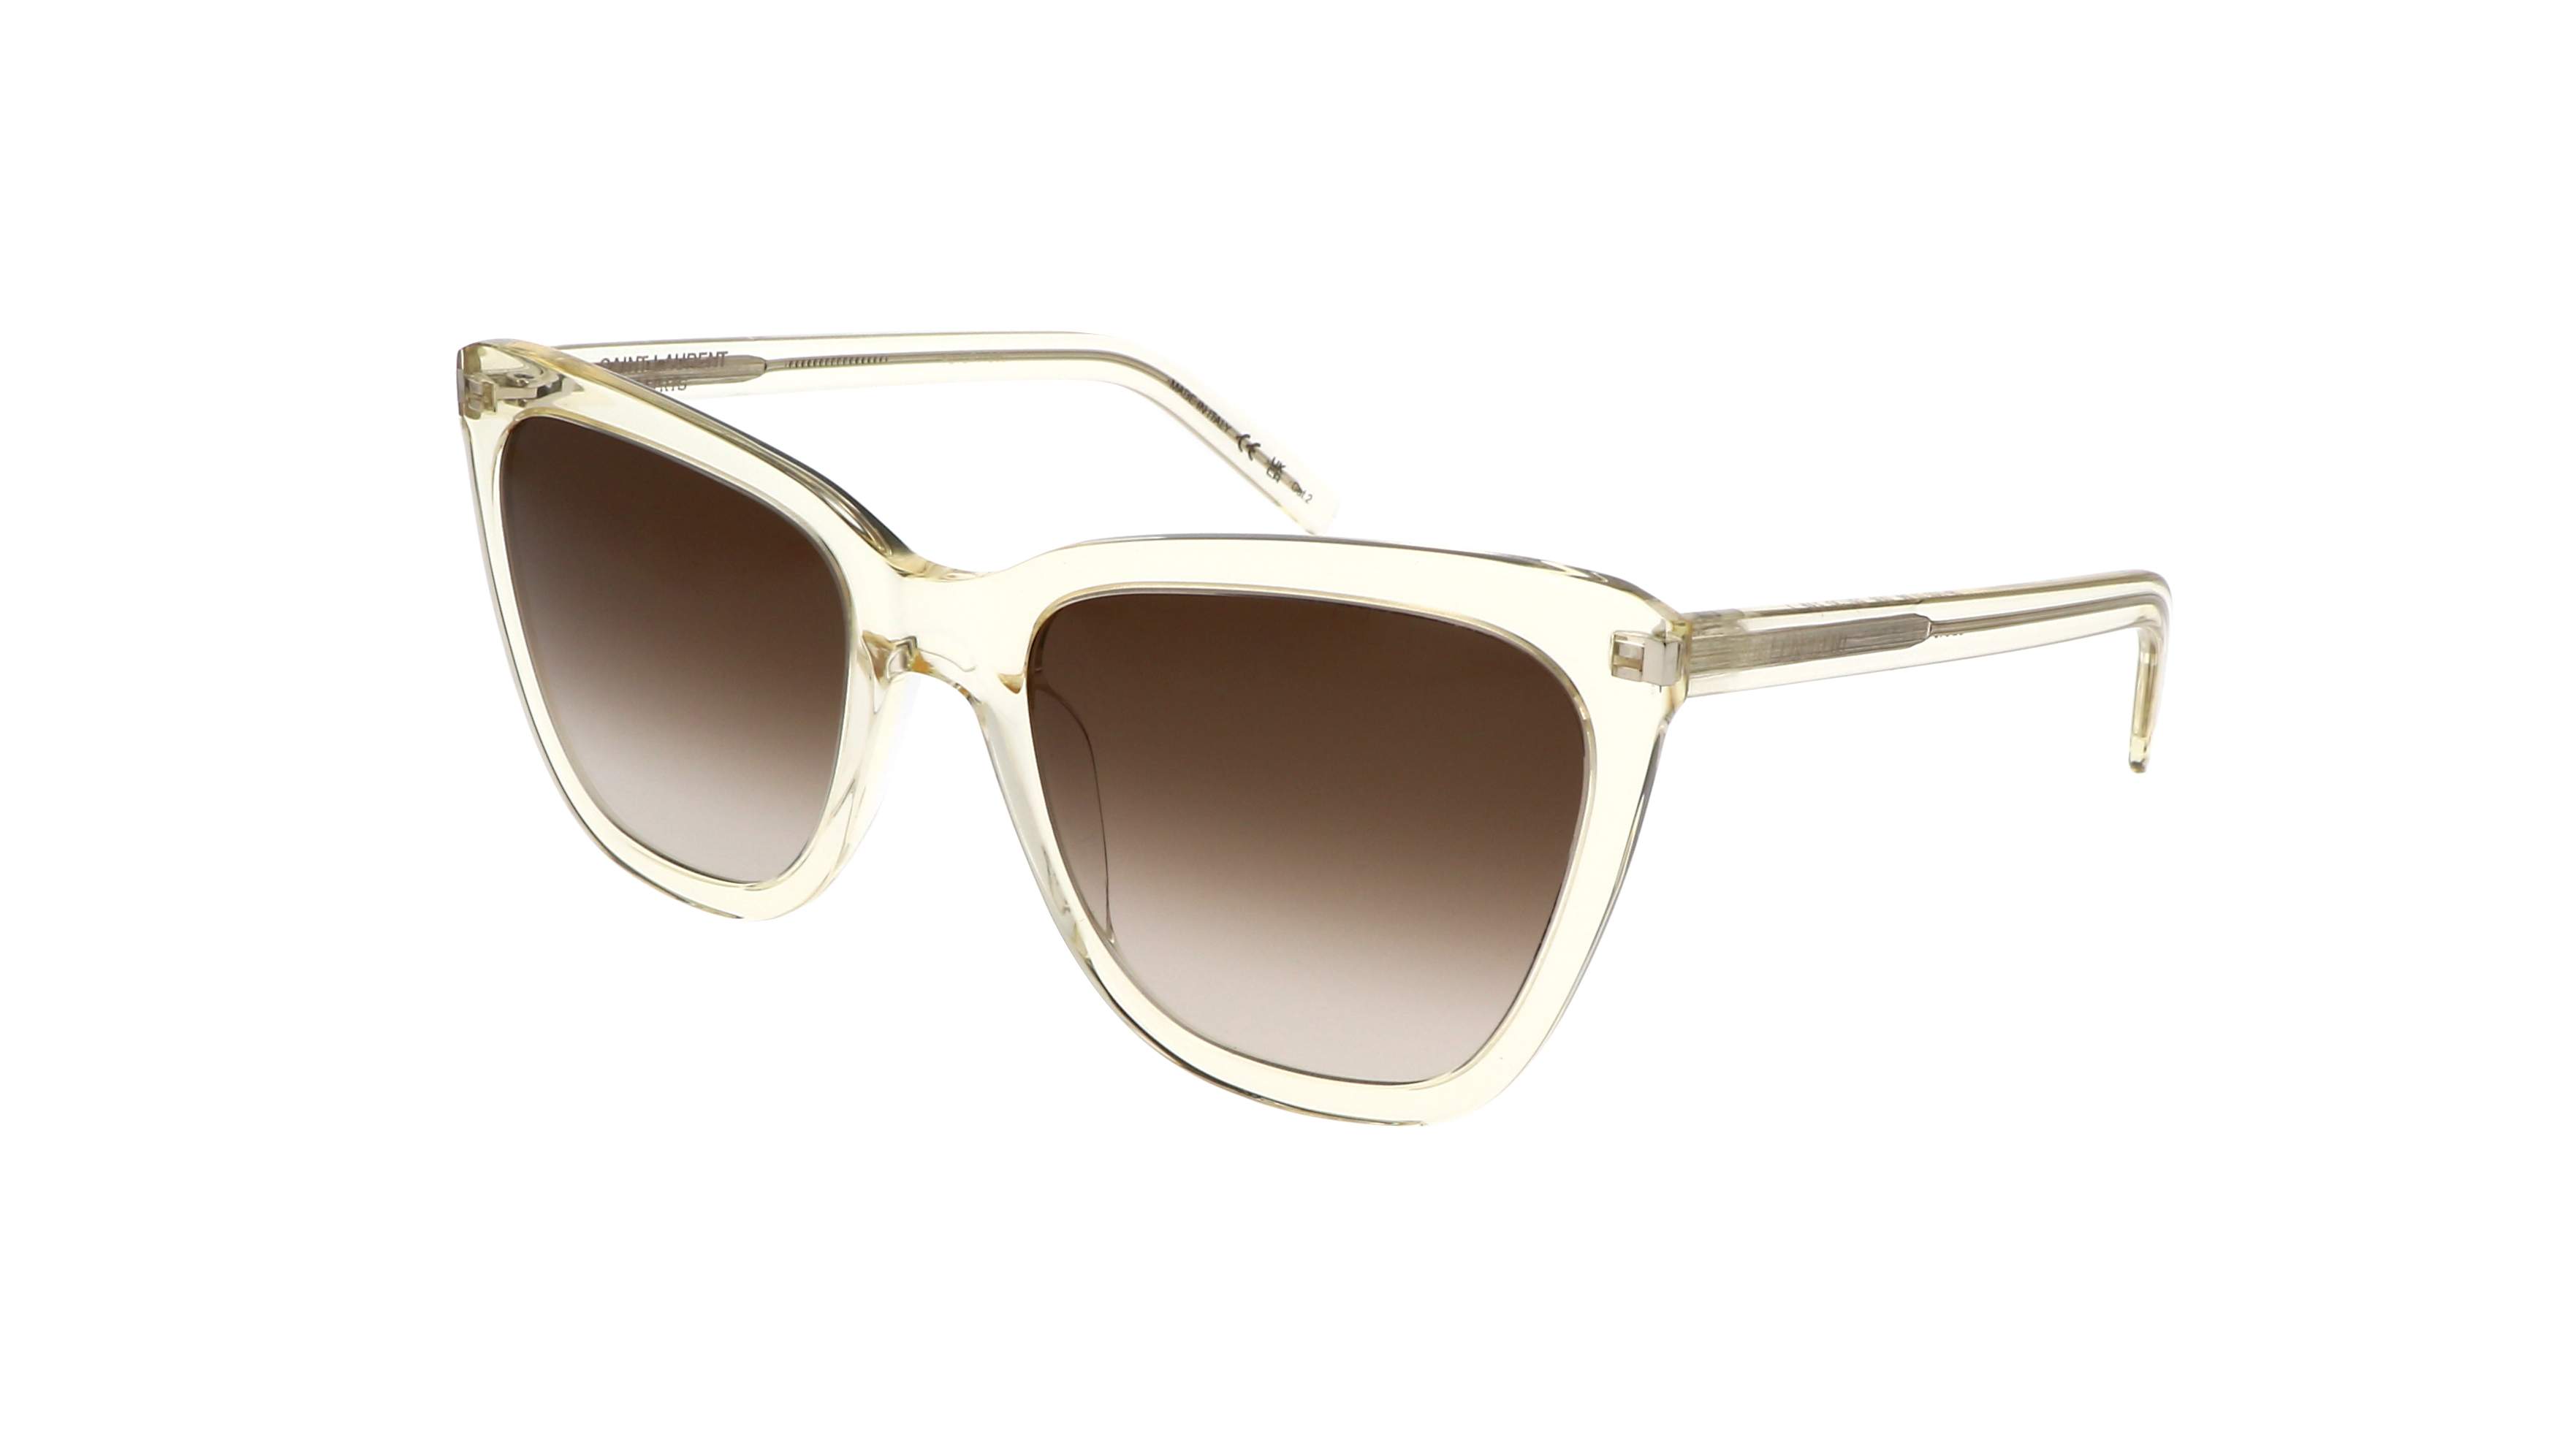 Sunglasses Saint Laurent Classic Sl 548 Slim 006 50 20 Yellow In Stock Price 17579